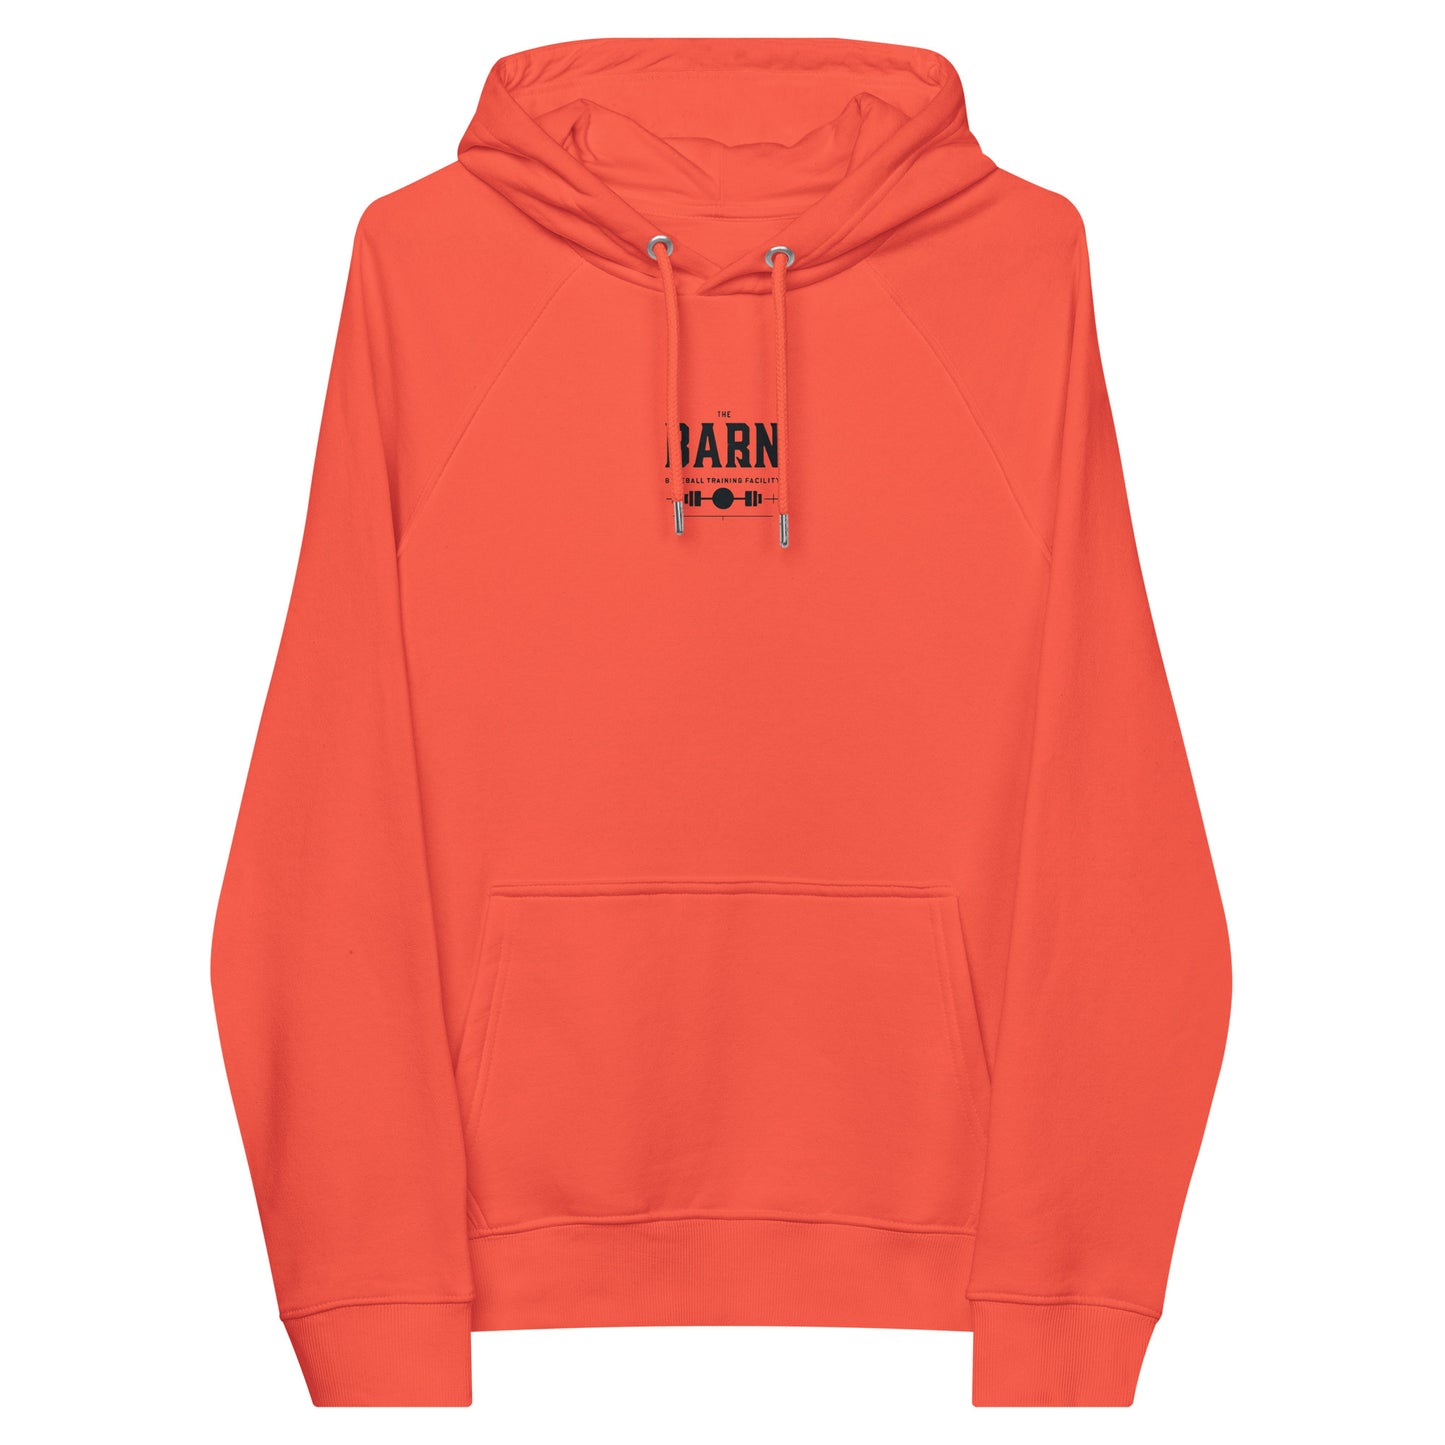 The Barn hoodie